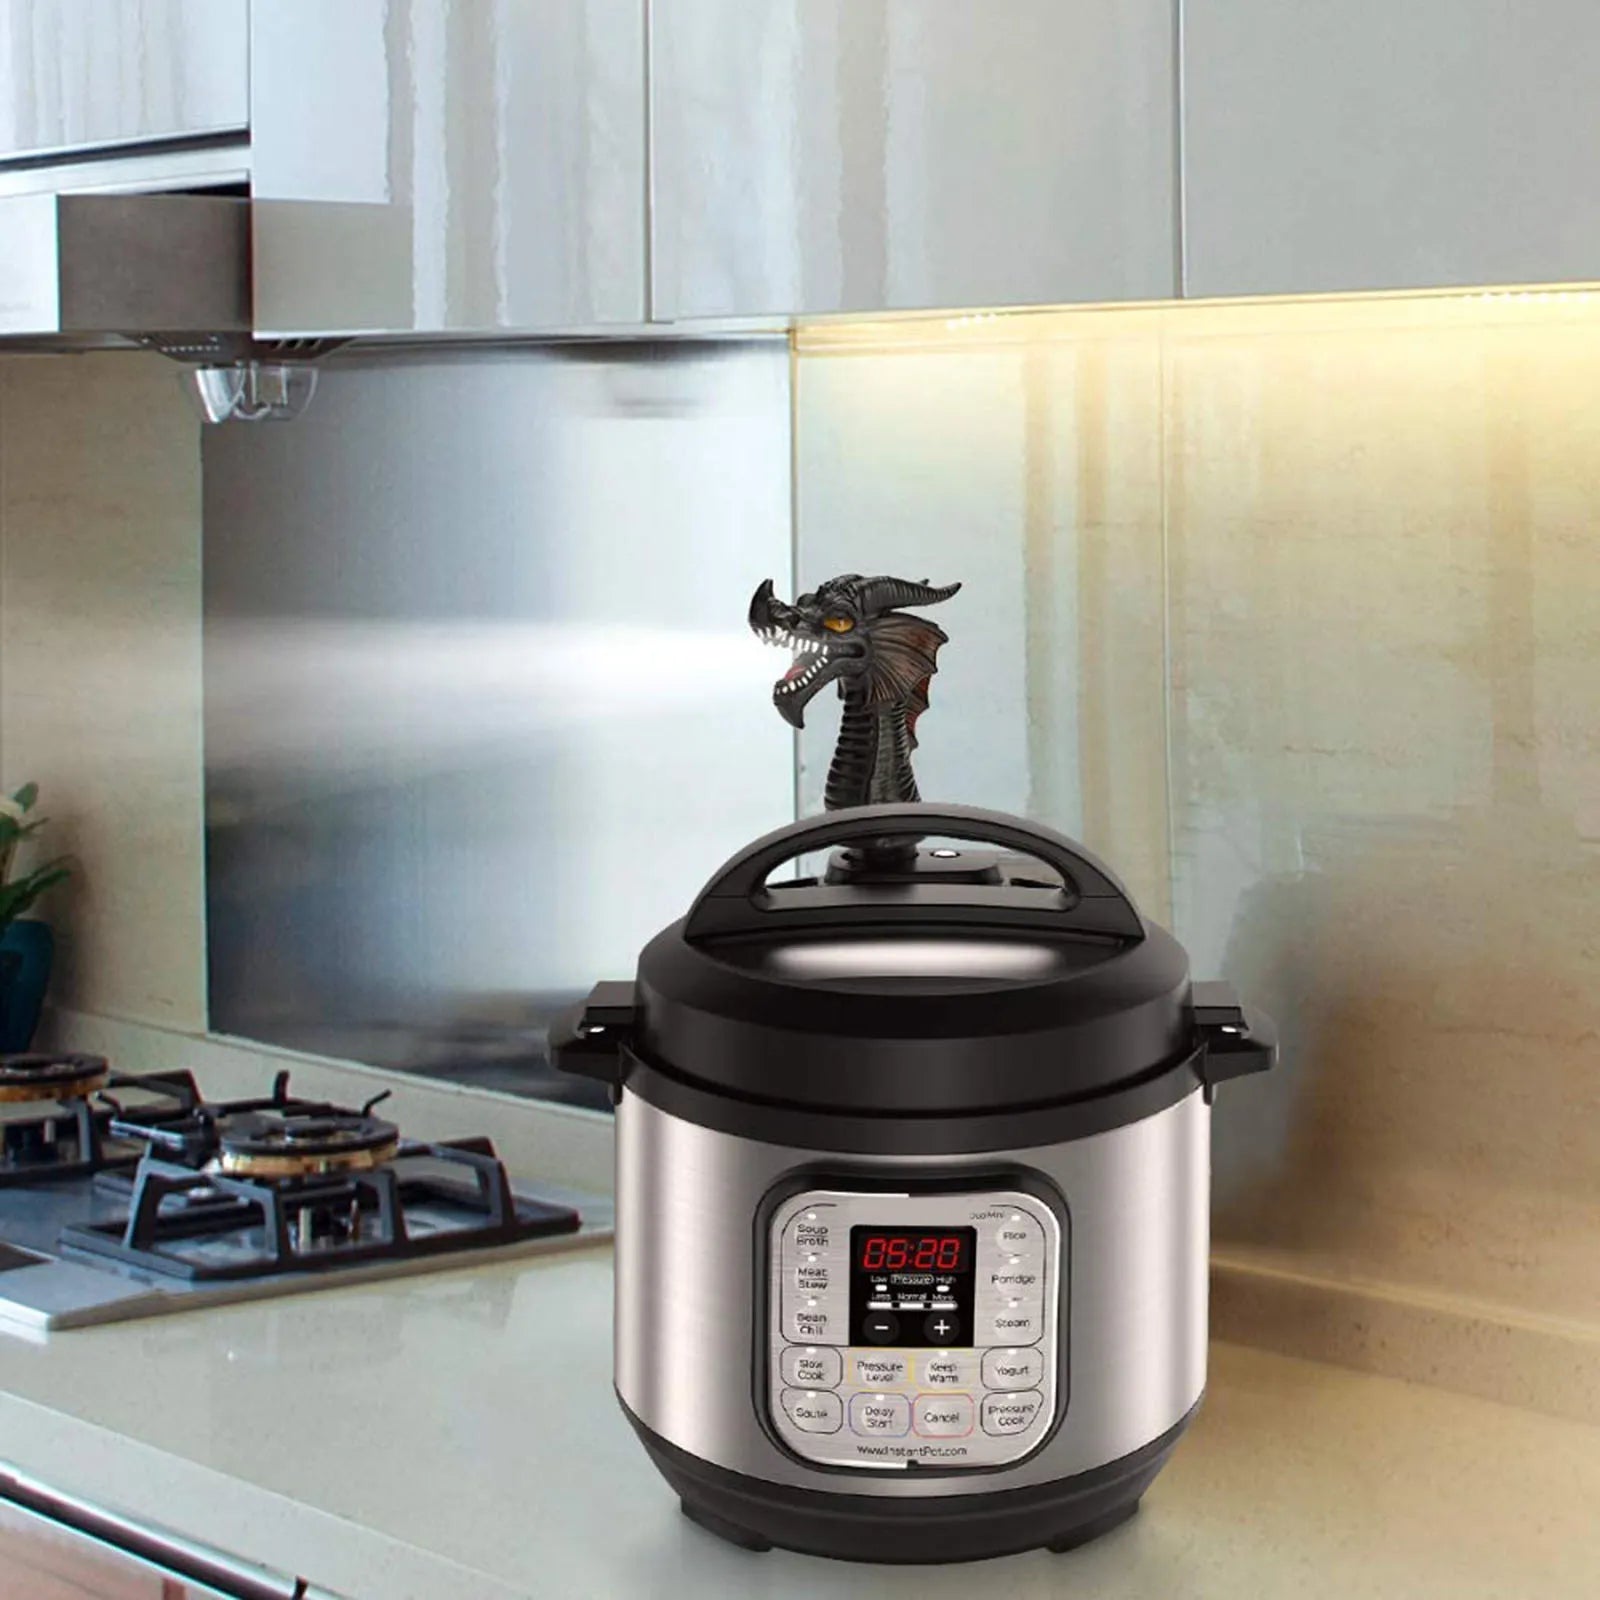 Fire-breathing Dragon Steam Release Accessory Steam Diverter for Pressure Cooker Kitchen Supplies